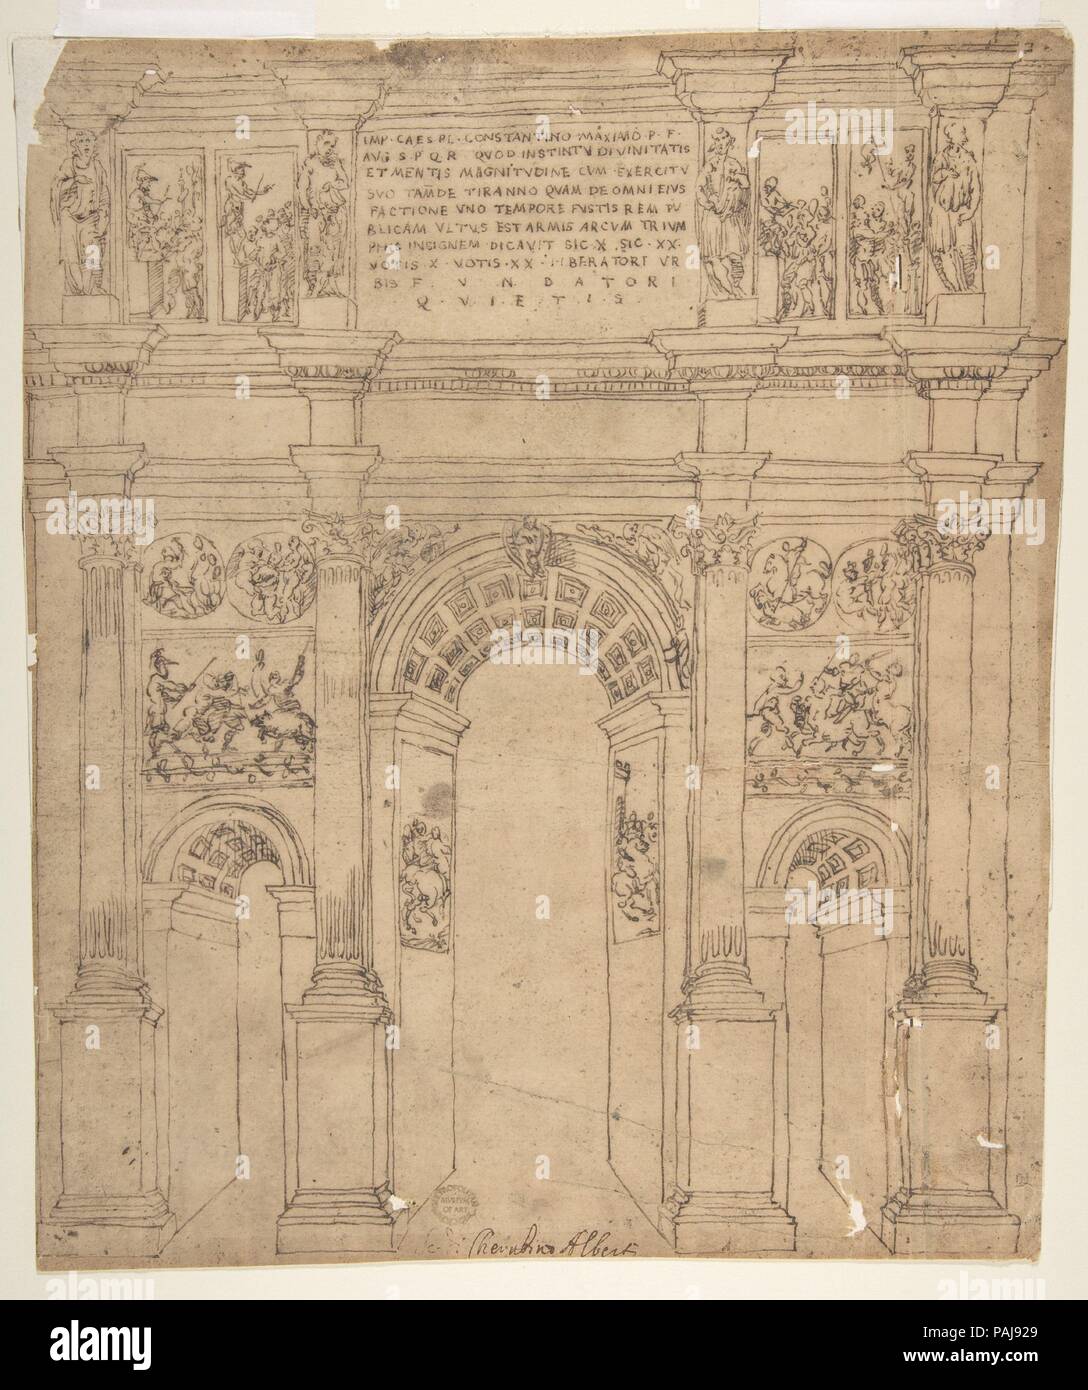 Arch of Constantine, Rome. Artist: attributed to Bartolomeo Neroni (Il Riccio) (Italian, Siena 1505/15-1571 Siena). Dimensions: 11 15/16 x 10 1/16in. (30.3 x 25.5cm). Date: 1500-1571. Museum: Metropolitan Museum of Art, New York, USA. Stock Photo